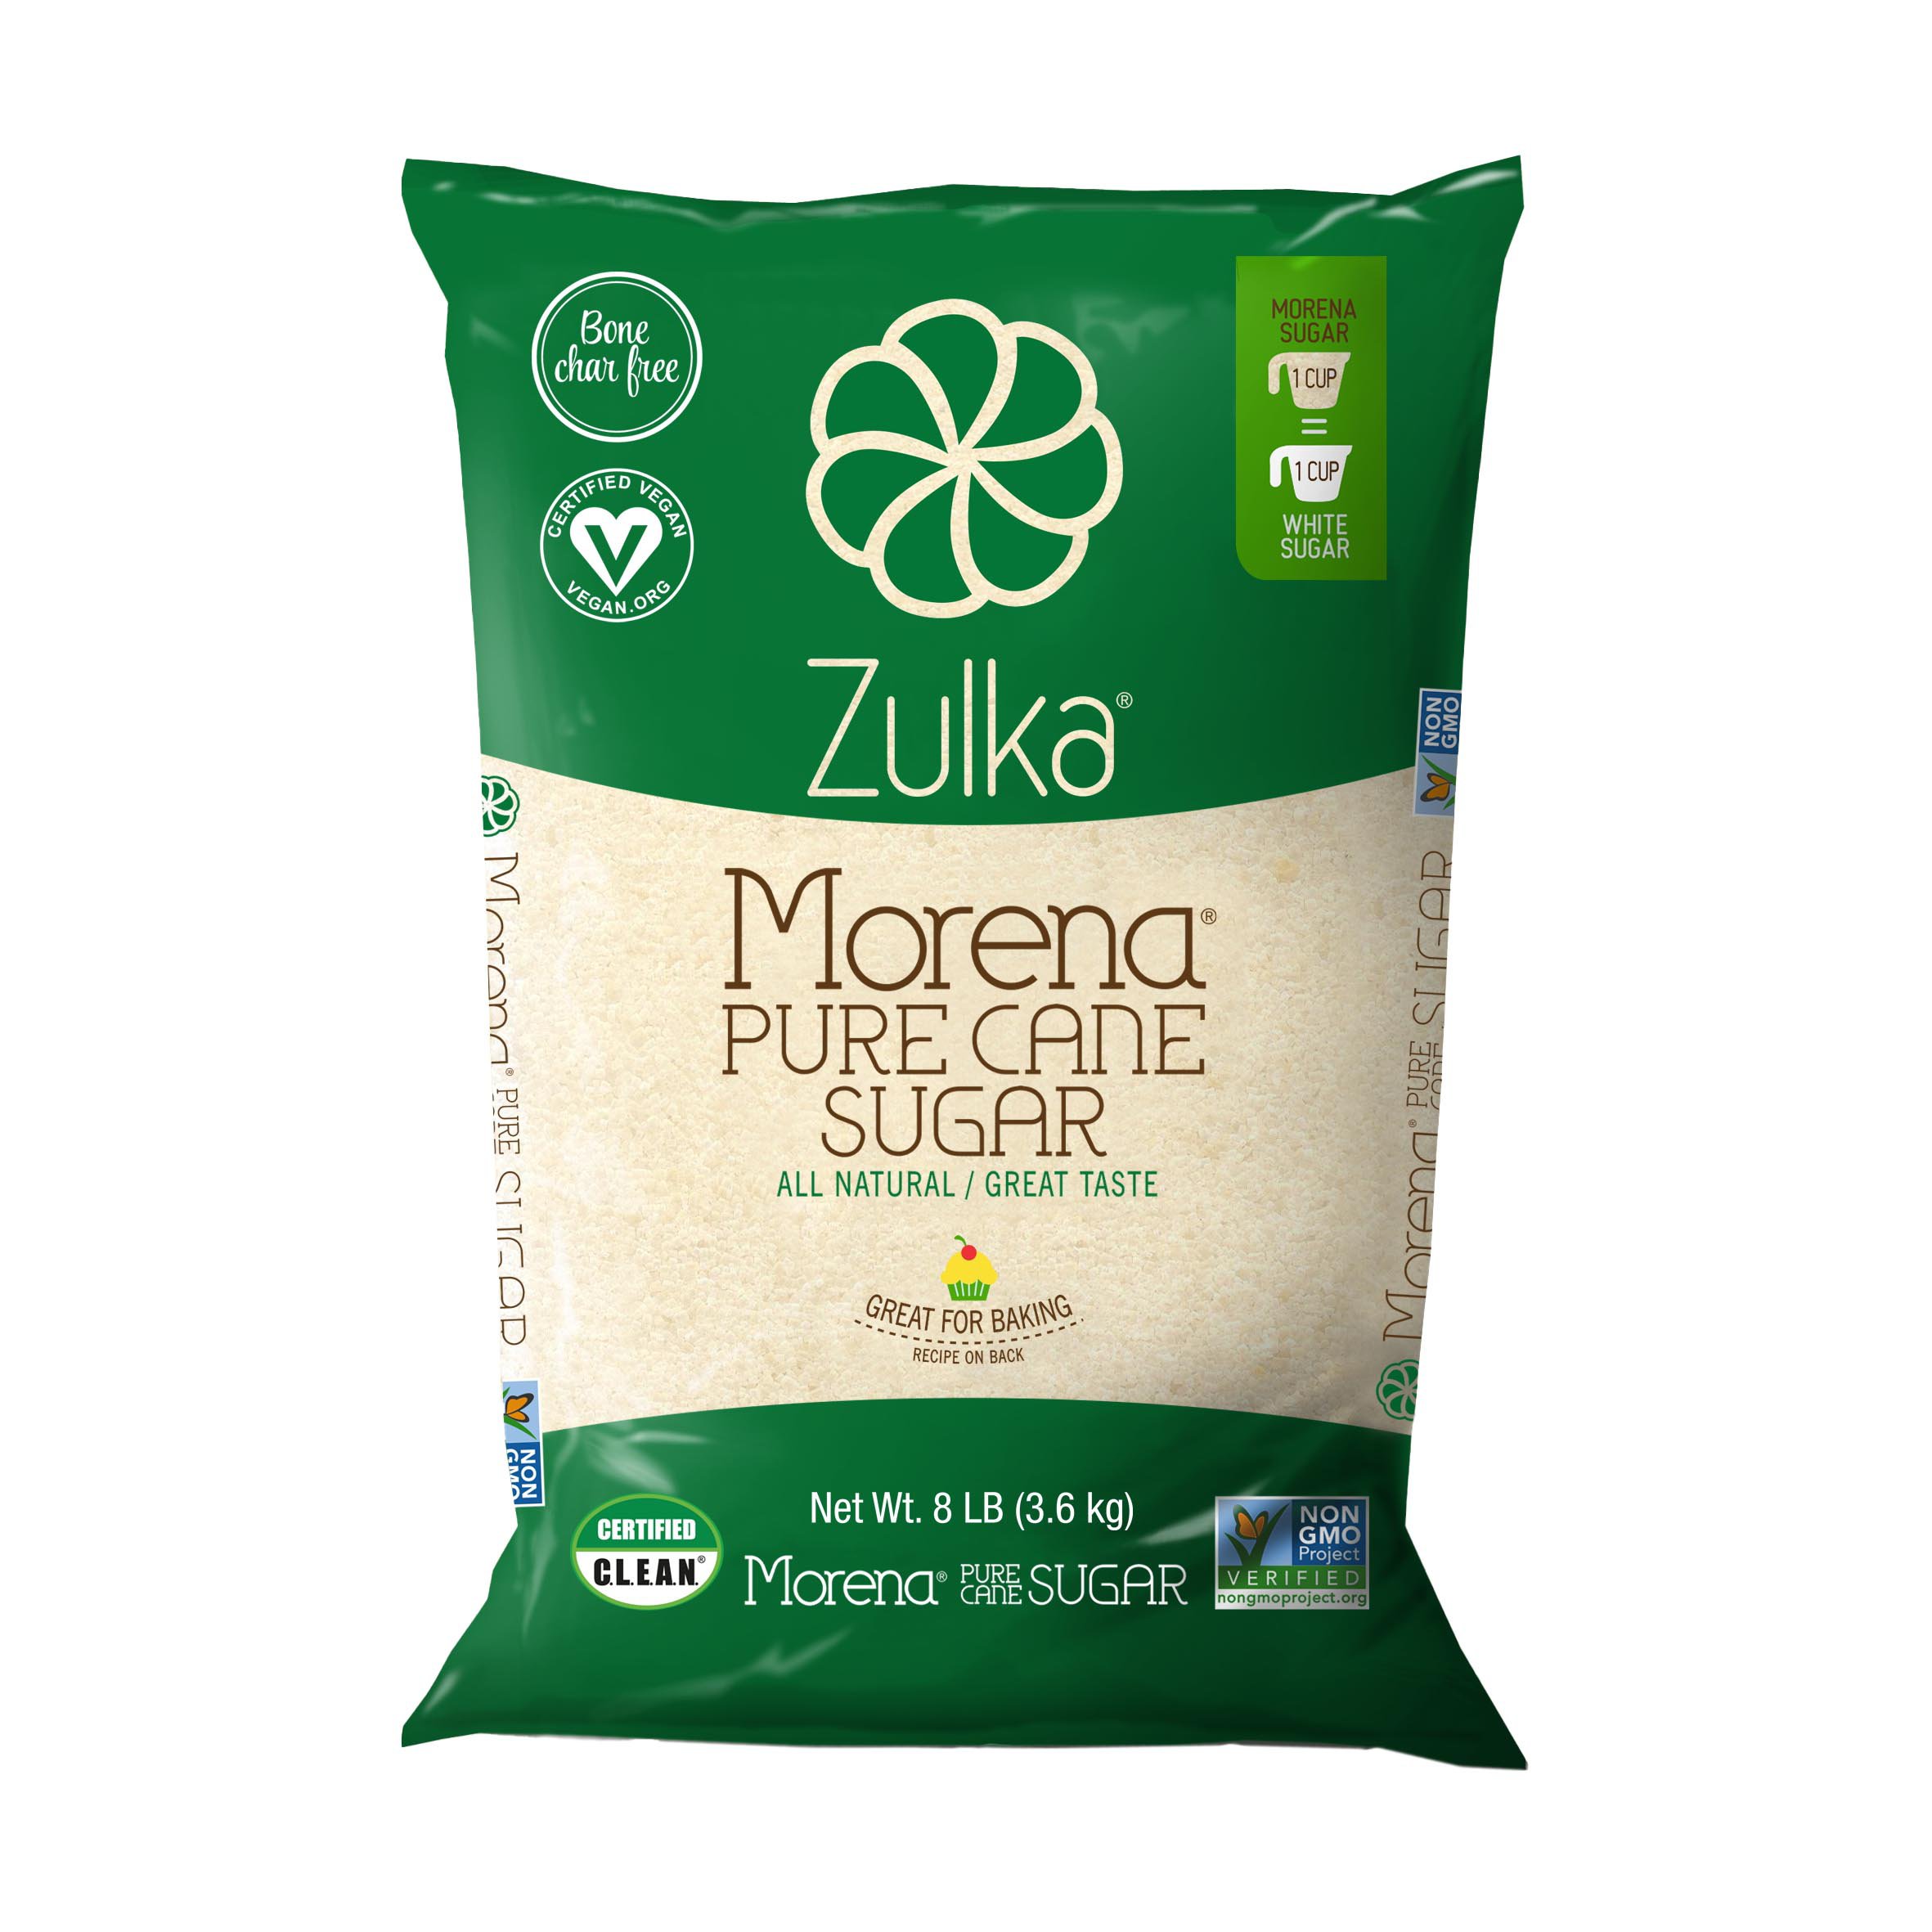 Zulka Morena Pure Cane Sugar - Shop Sugar & Sweeteners at H-E-B